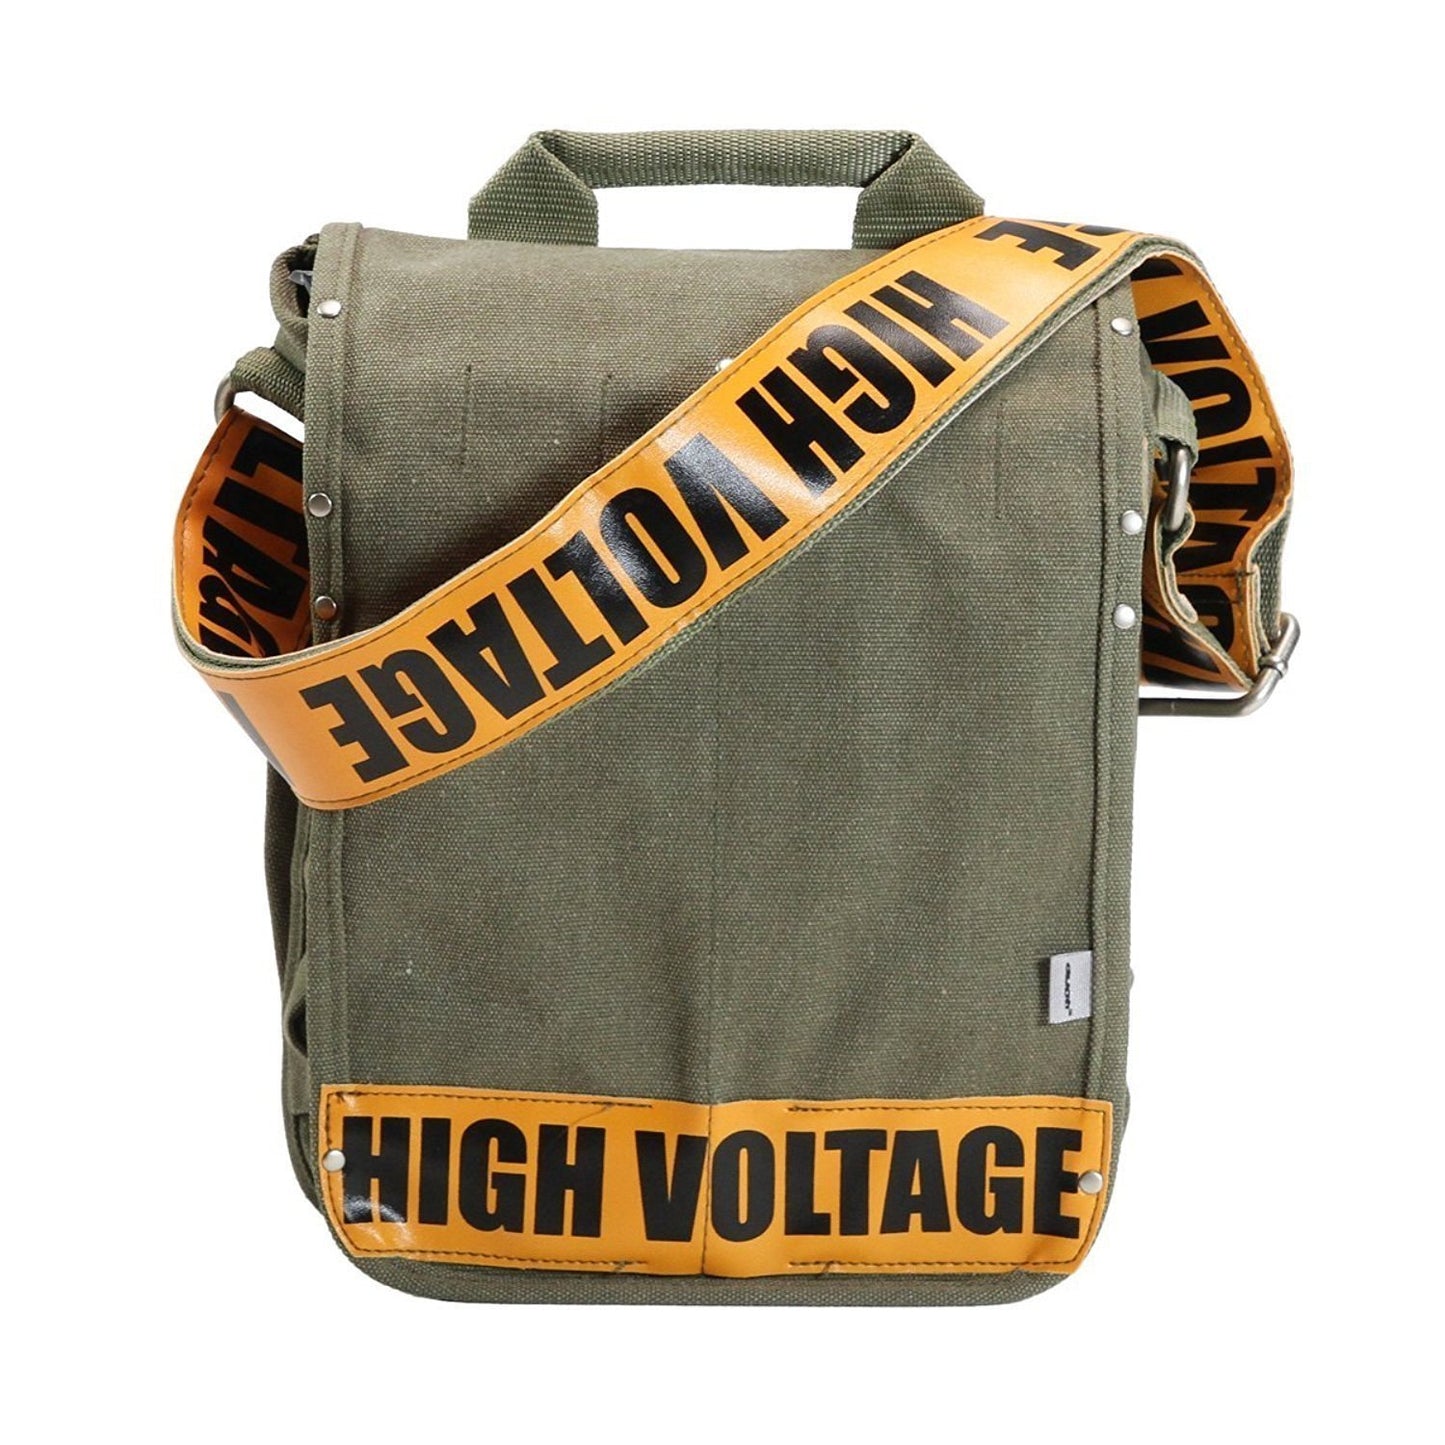 Ducti Messenger Bags, High Voltage